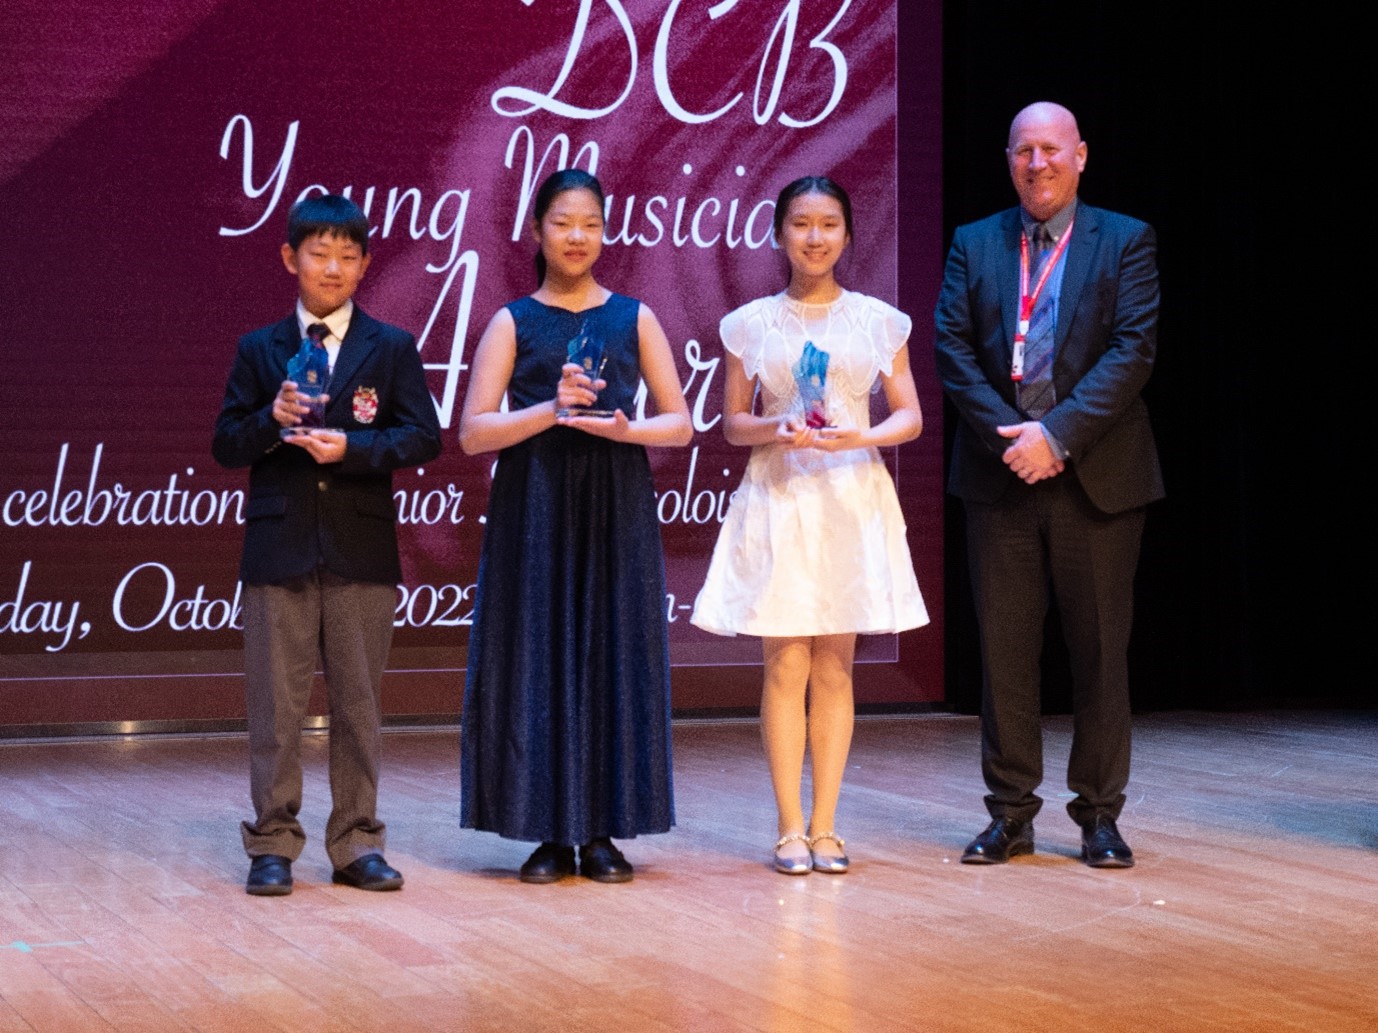 DCB Young Musician Awards 2022